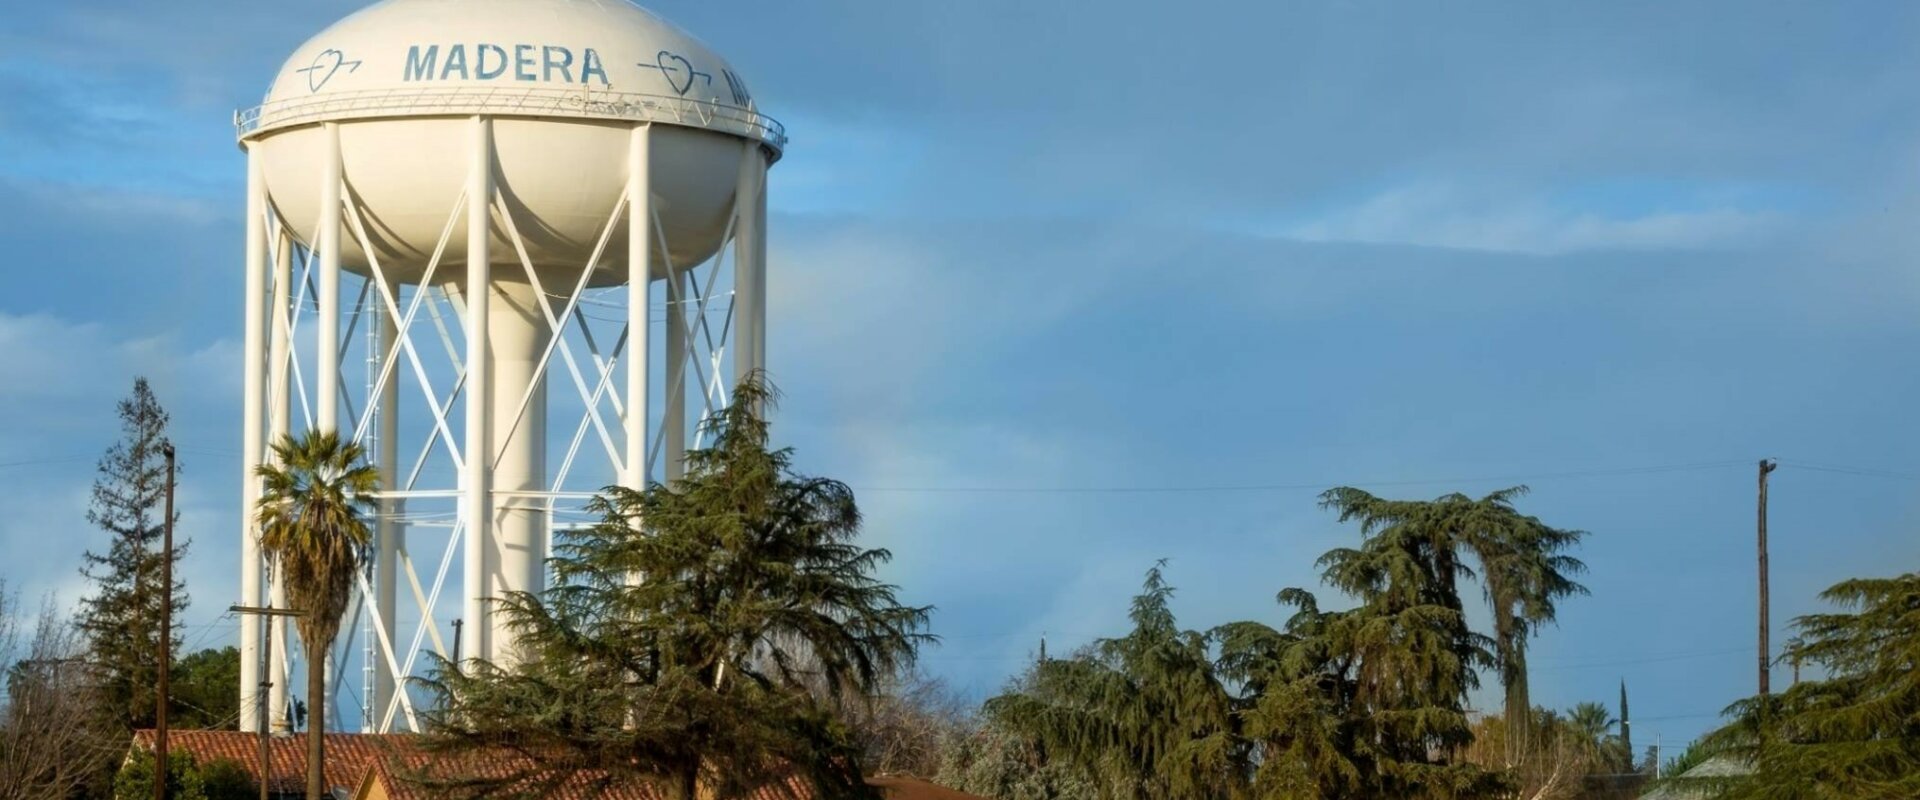 Madera County Water Tower